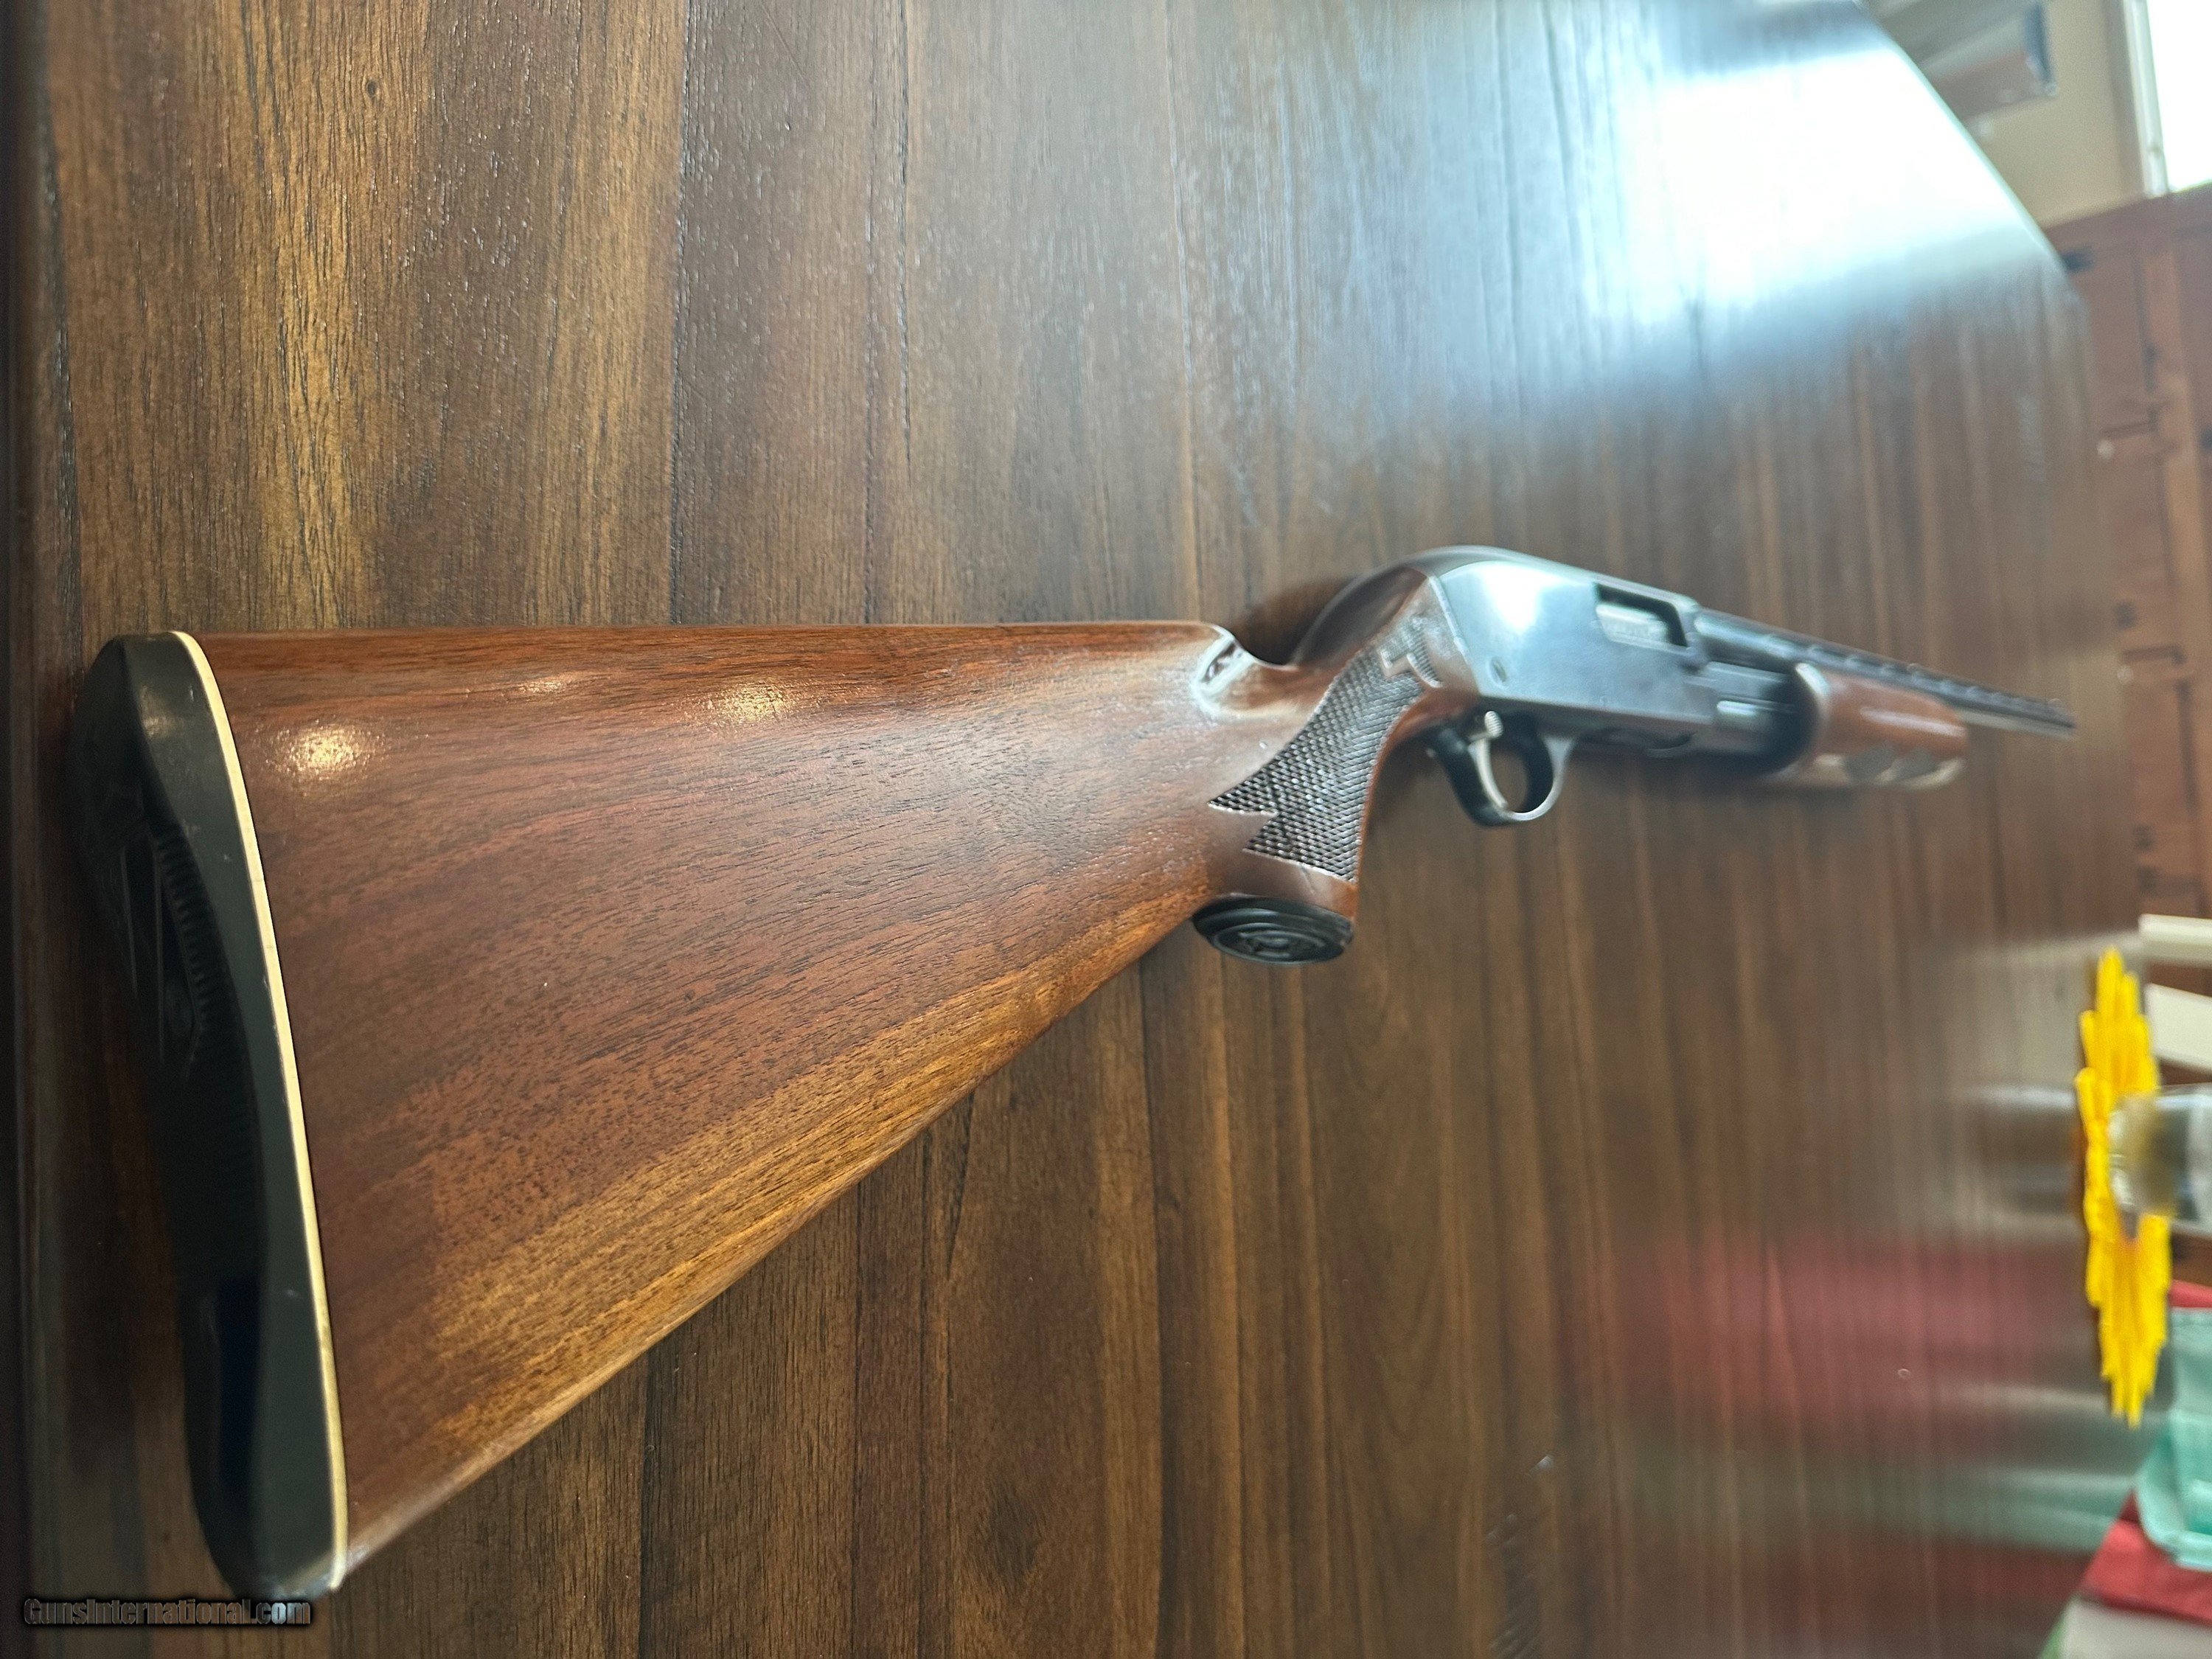 High Standard Flite King, 12 ga. slide action shotgun, 28” plain barrel